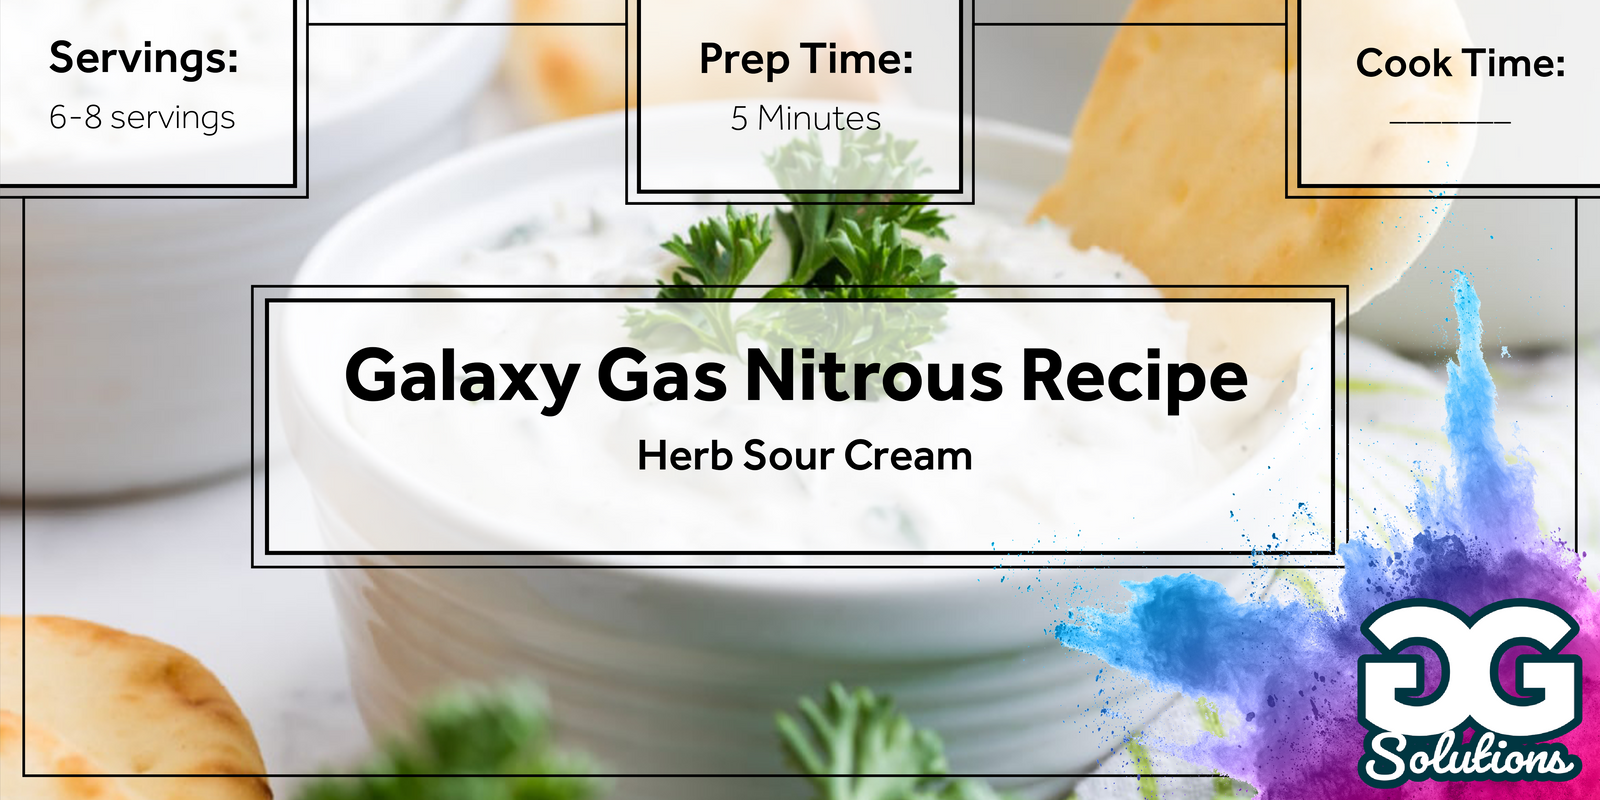 Galaxy Gas Nitrous Recipe: Herb Sour Cream